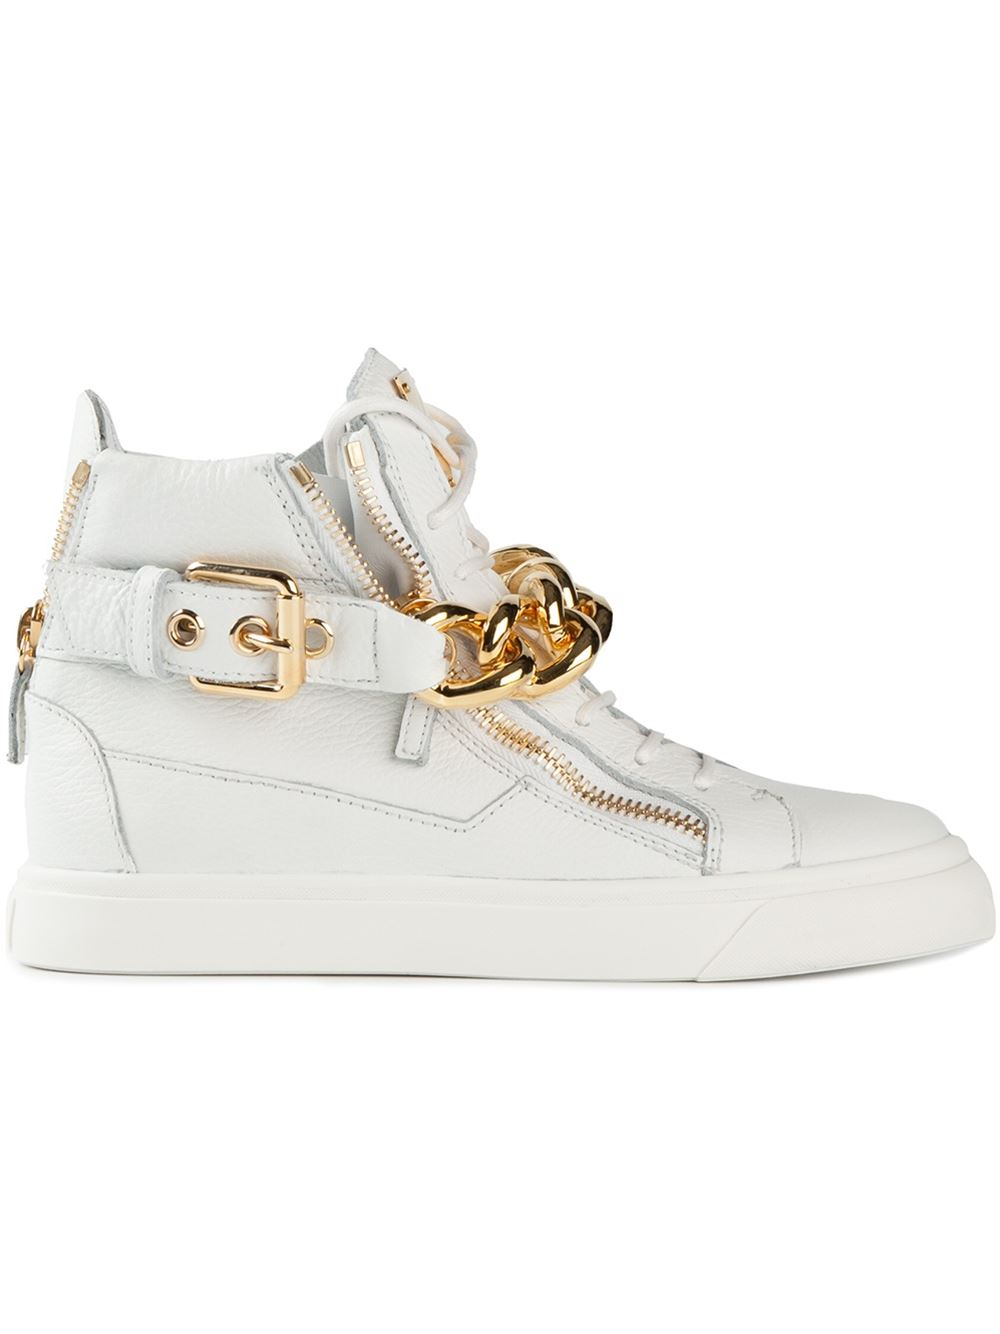 Lyst - Giuseppe Zanotti Gold Chain Sneakers in White